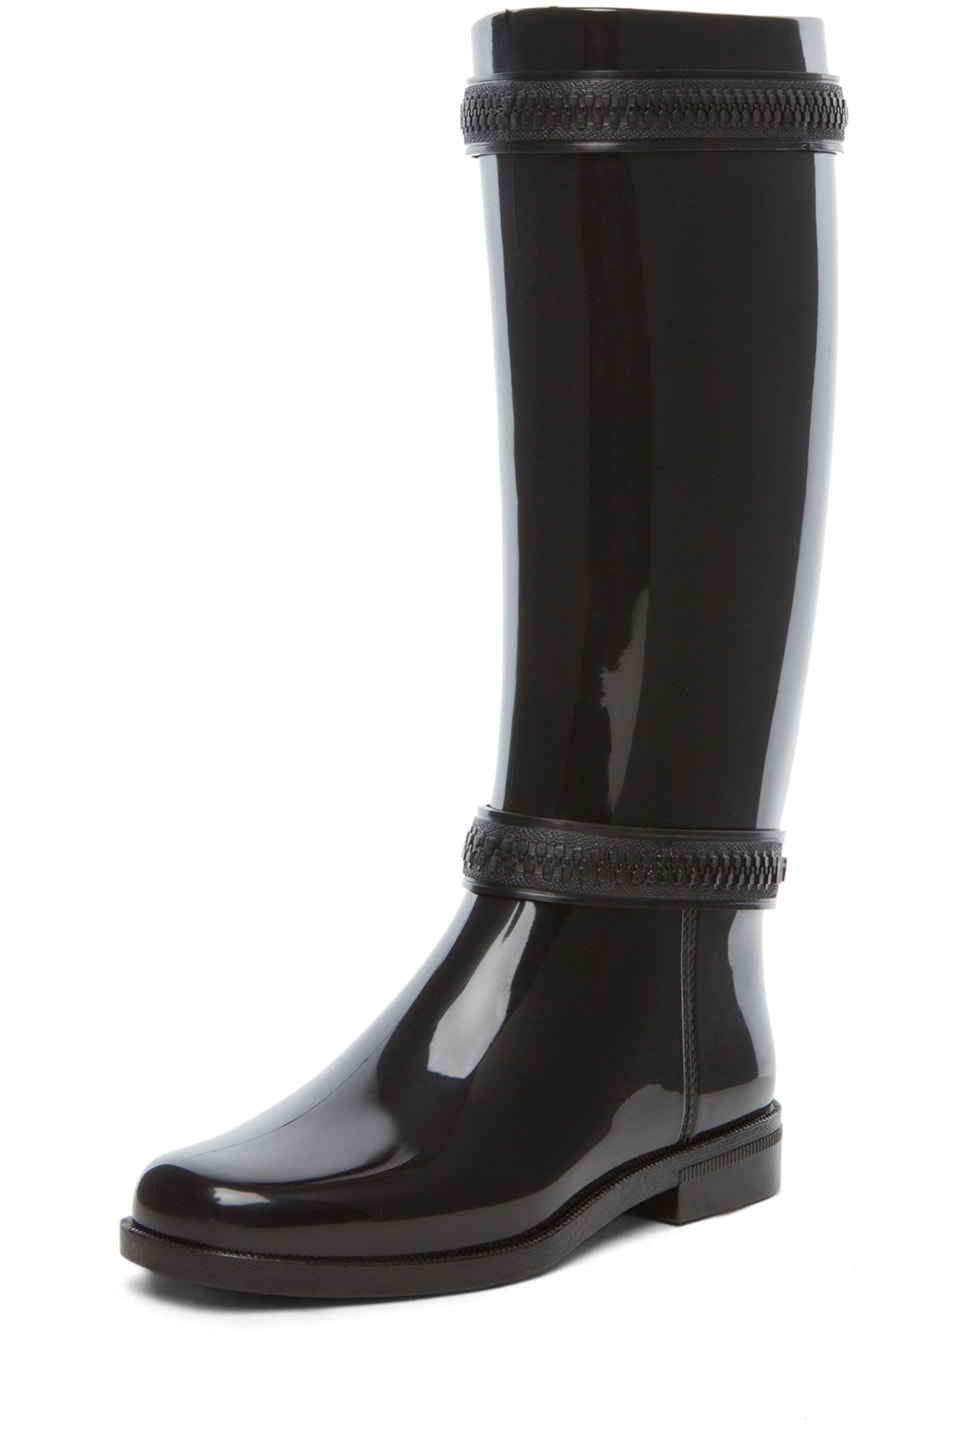 Givenchy Rain Boot in Black | FWRD